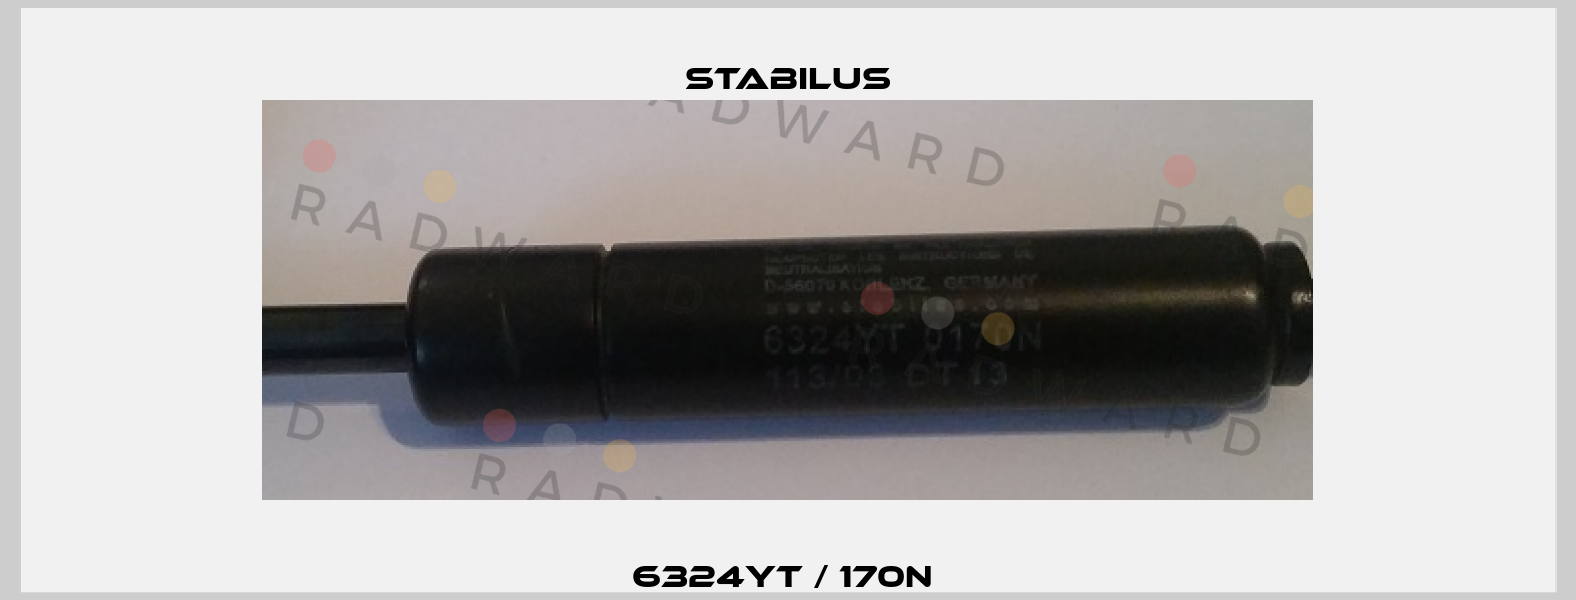 6324YT / 170N  Stabilus